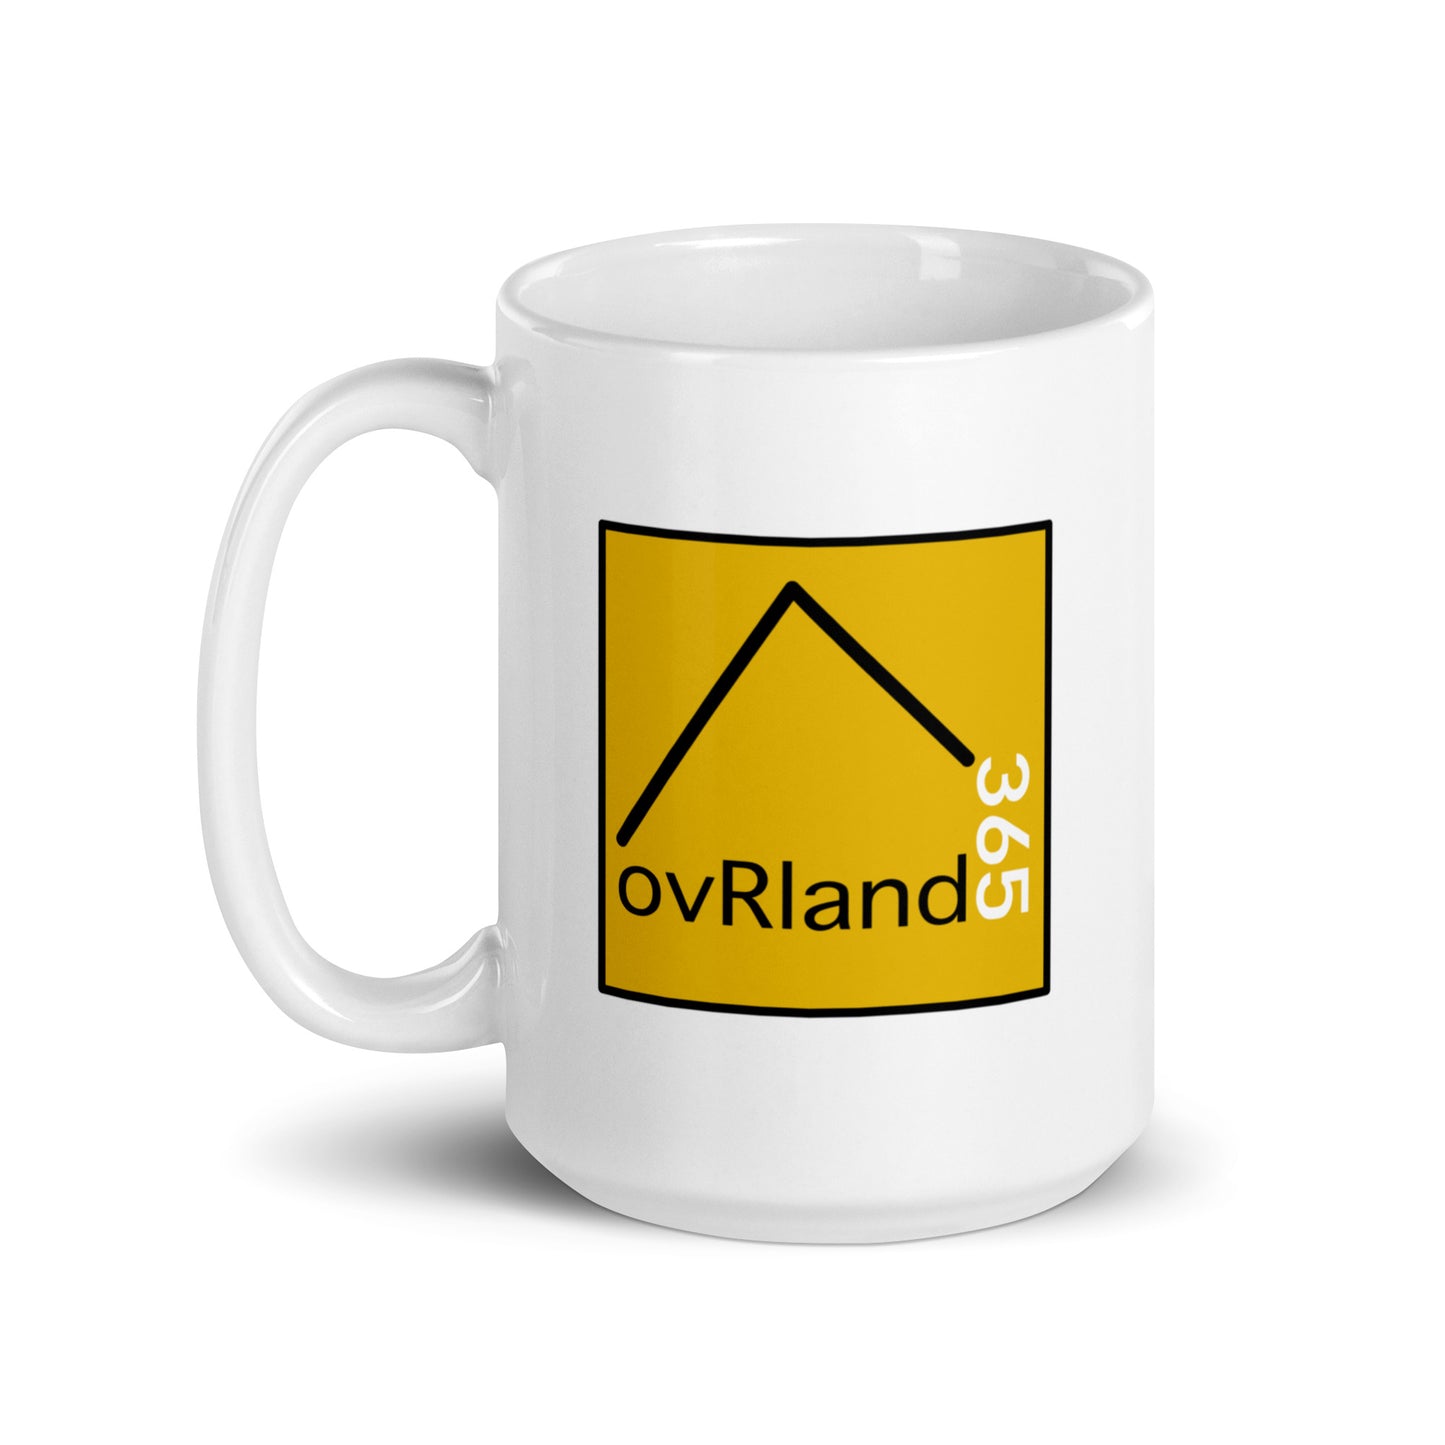 Get OuT aND OvERLand 15oz coffee mug - back view. overland365.com